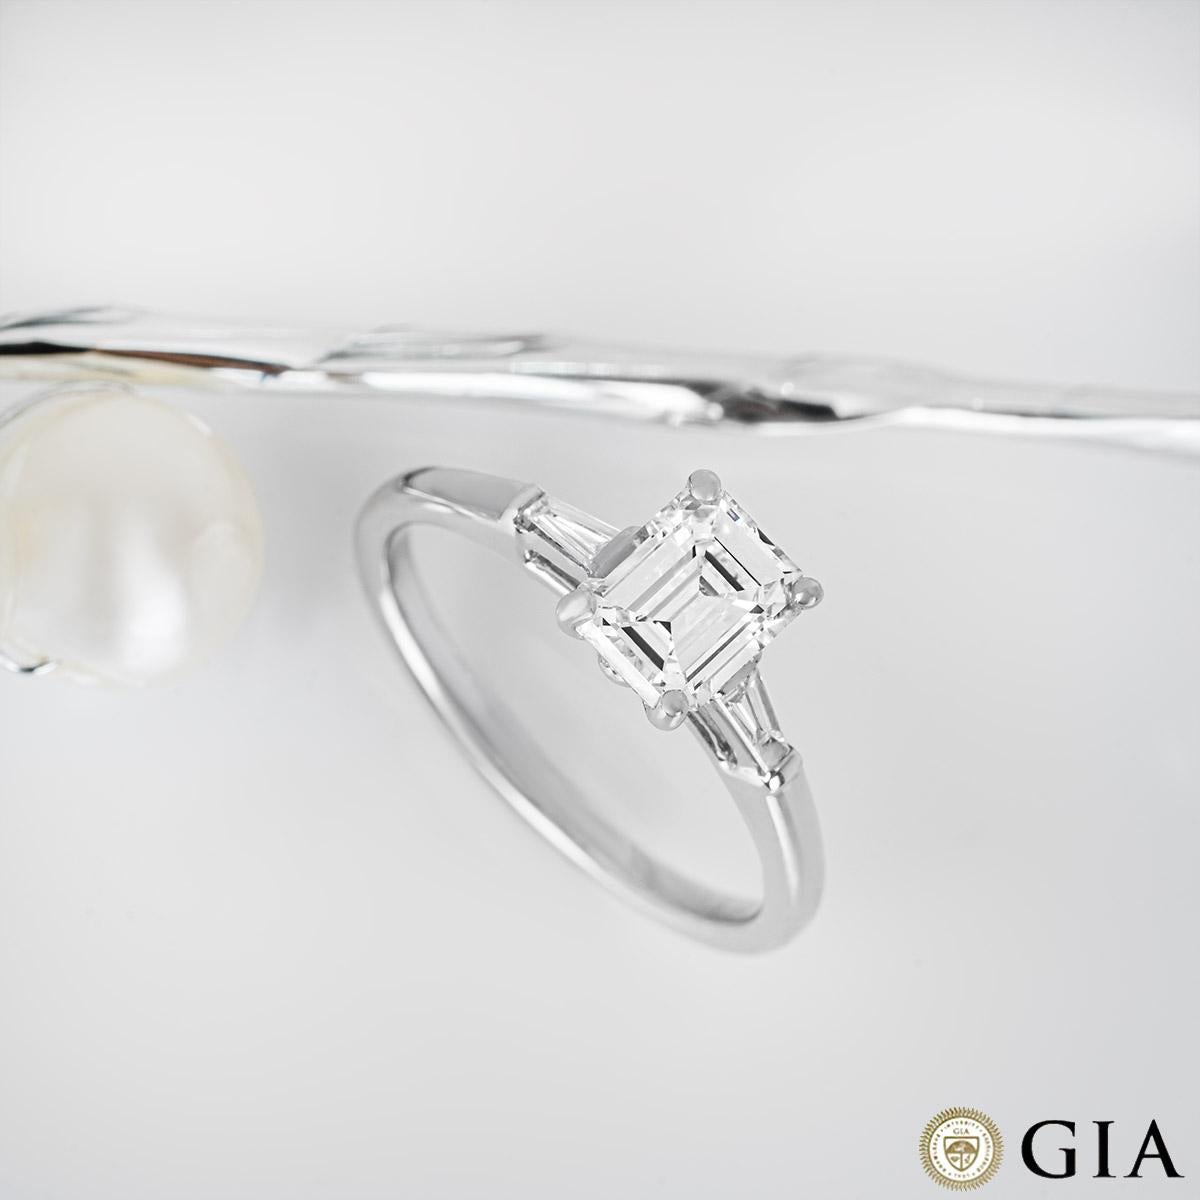 GIA Certified White Gold Emerald Cut Diamond Ring 1.01ct E/SI1 For Sale 3